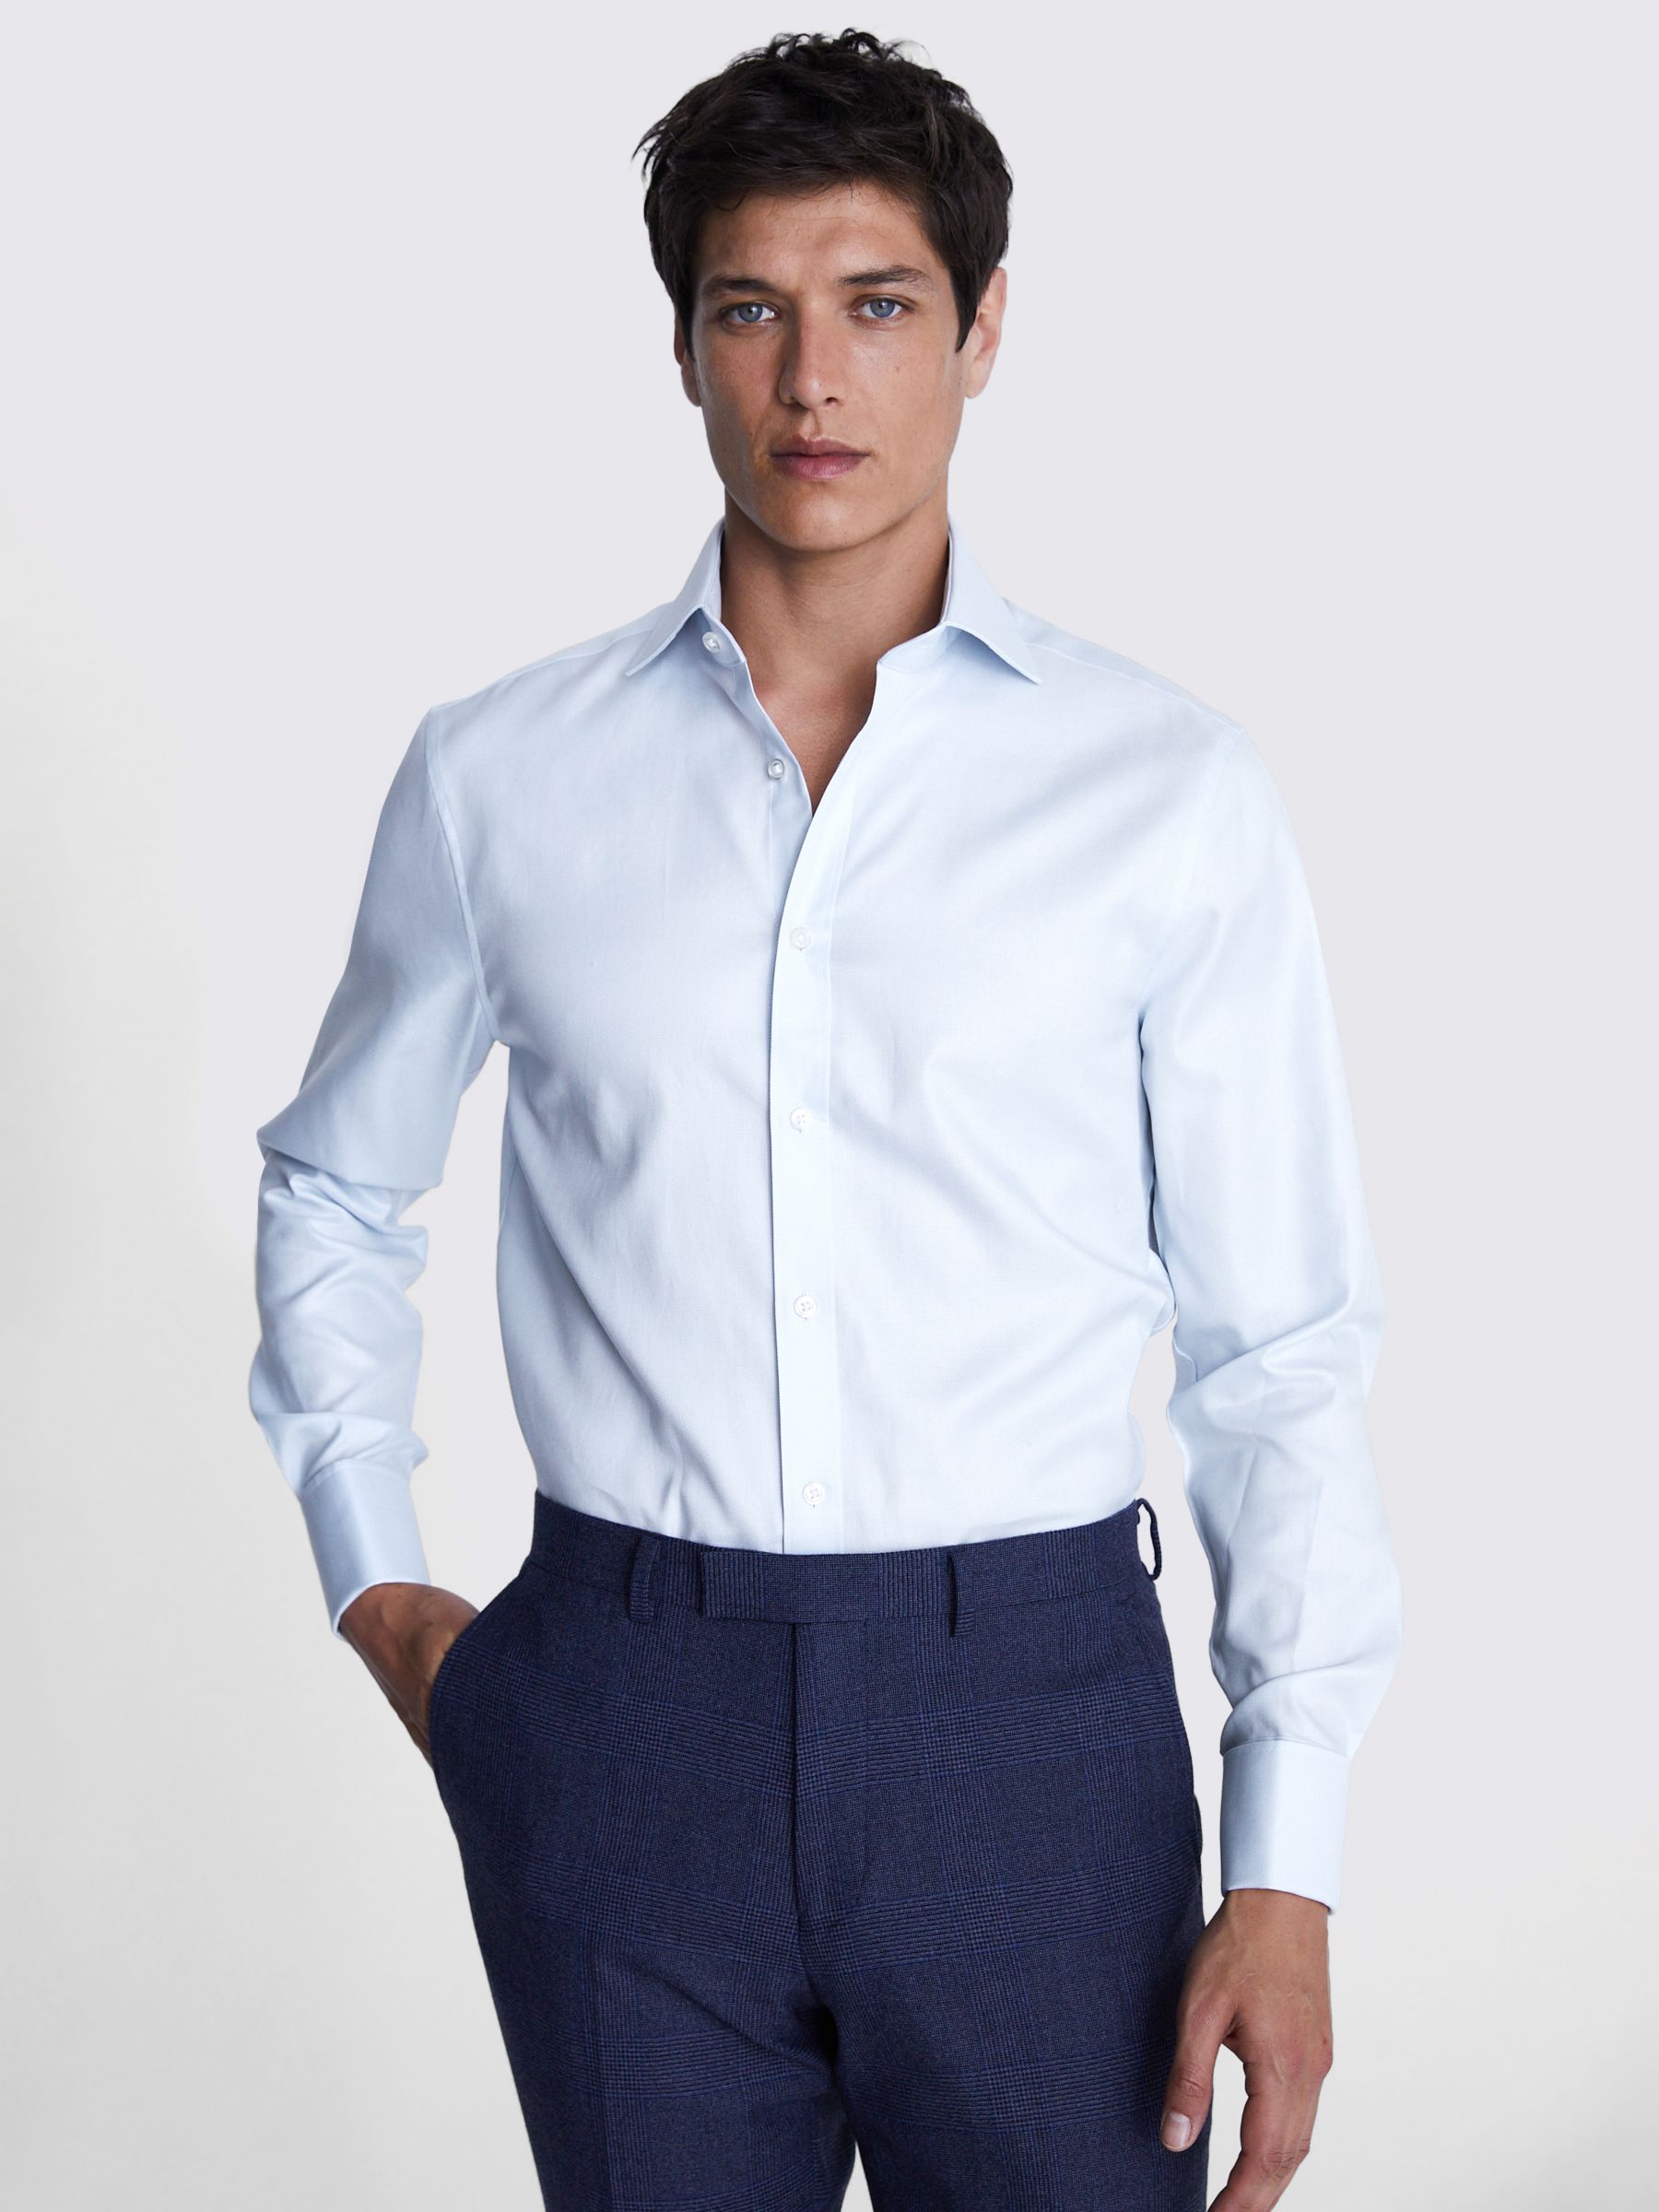 Moss Twill Tailored Fit Shirt, Light Blue at John Lewis & Partners